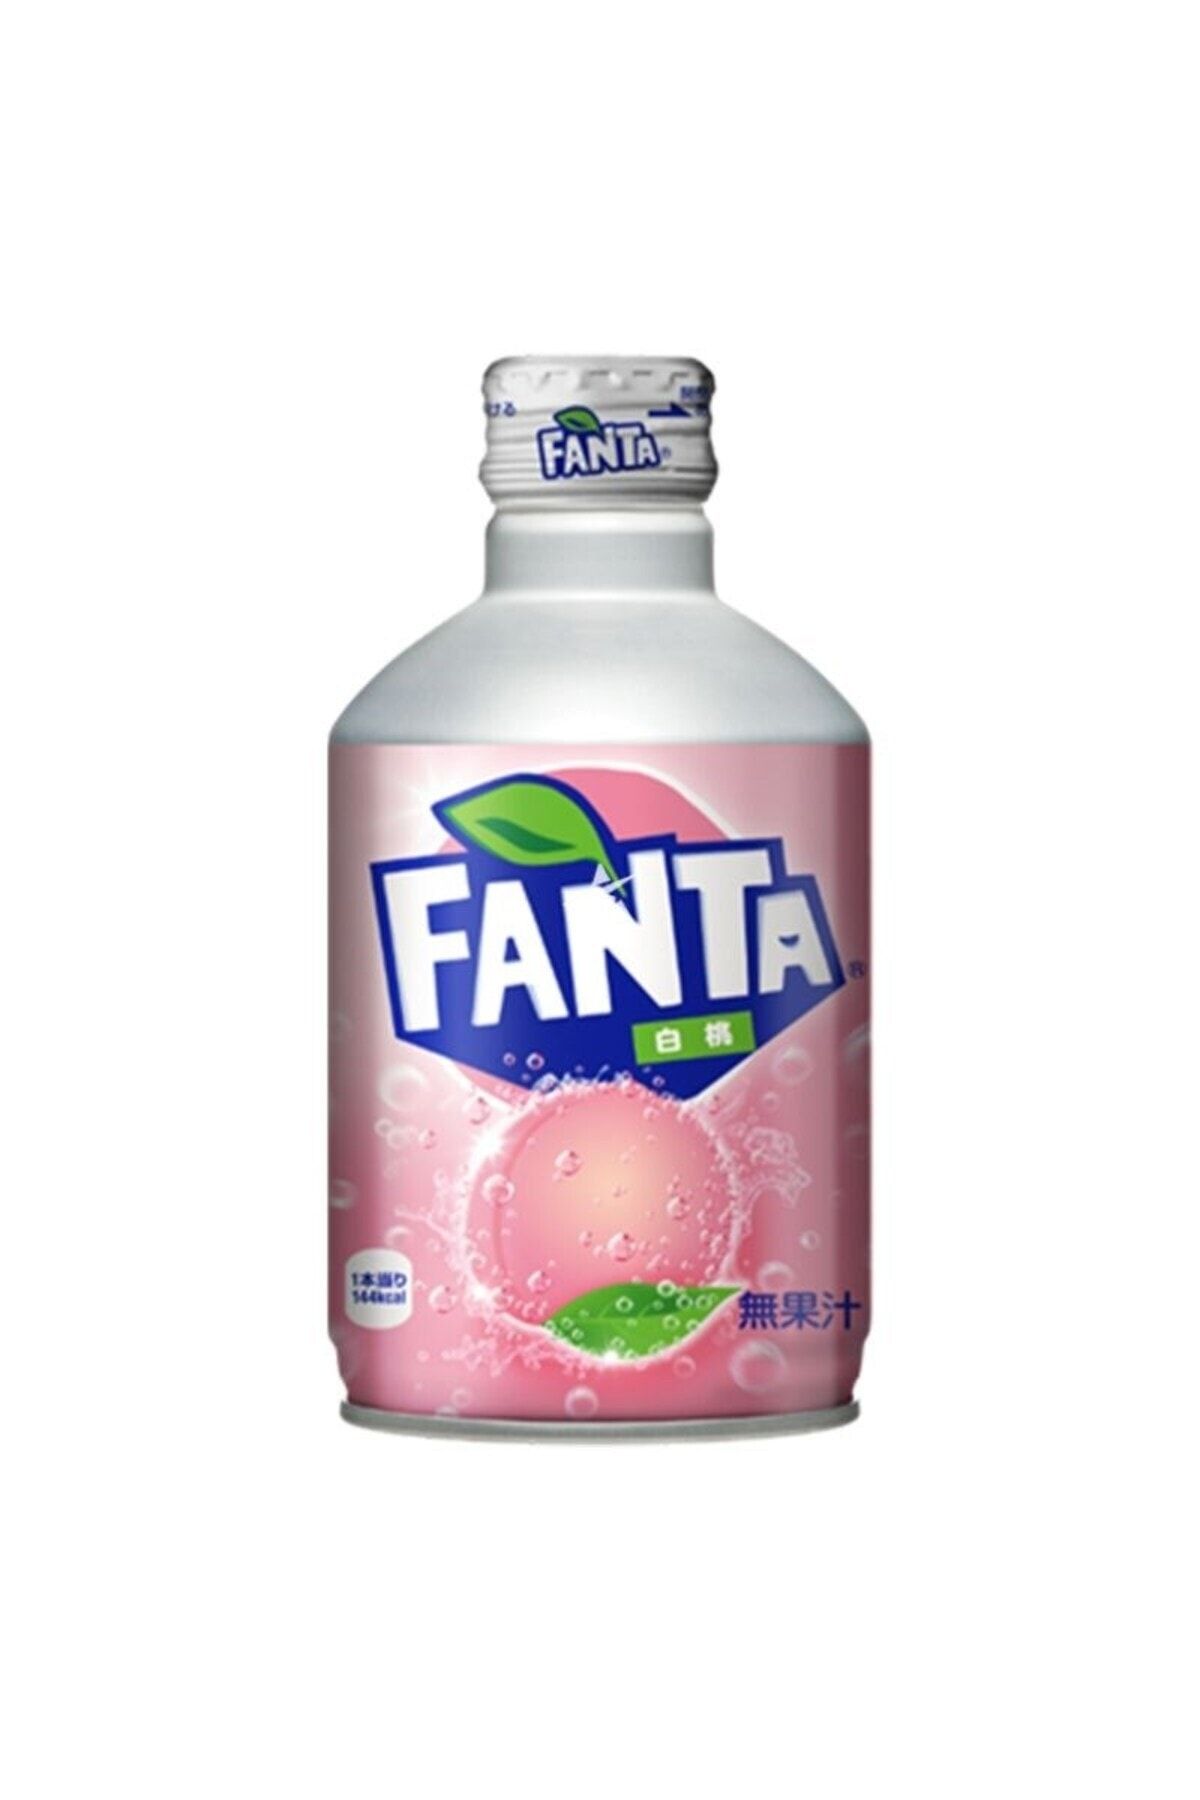 Fanta Japan Exclusive White Peach Flavour 300m